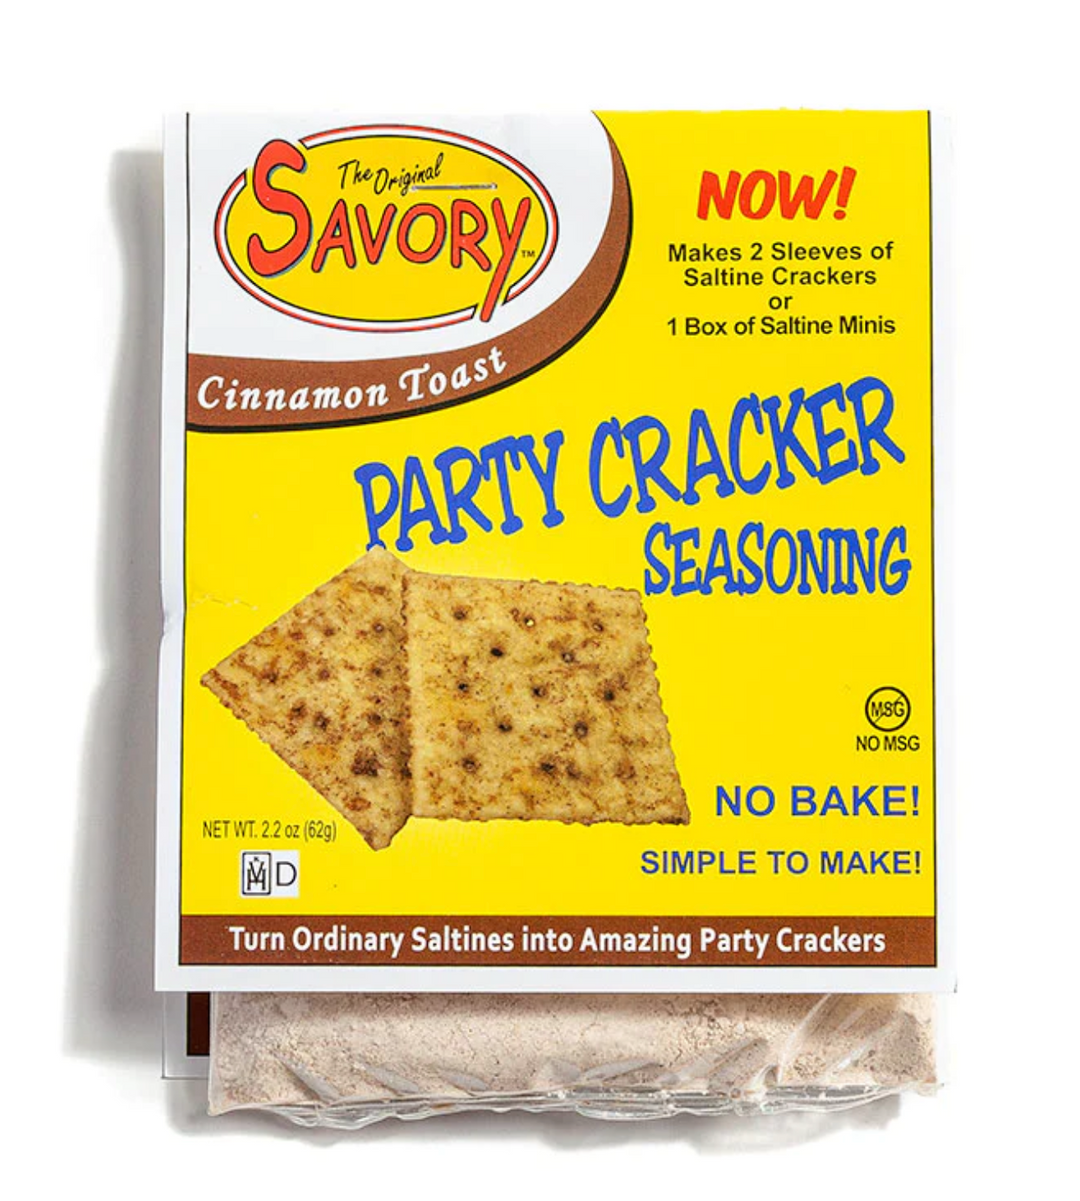 The Original Savory Party Cracker Seasoning- Cinnamon Toast